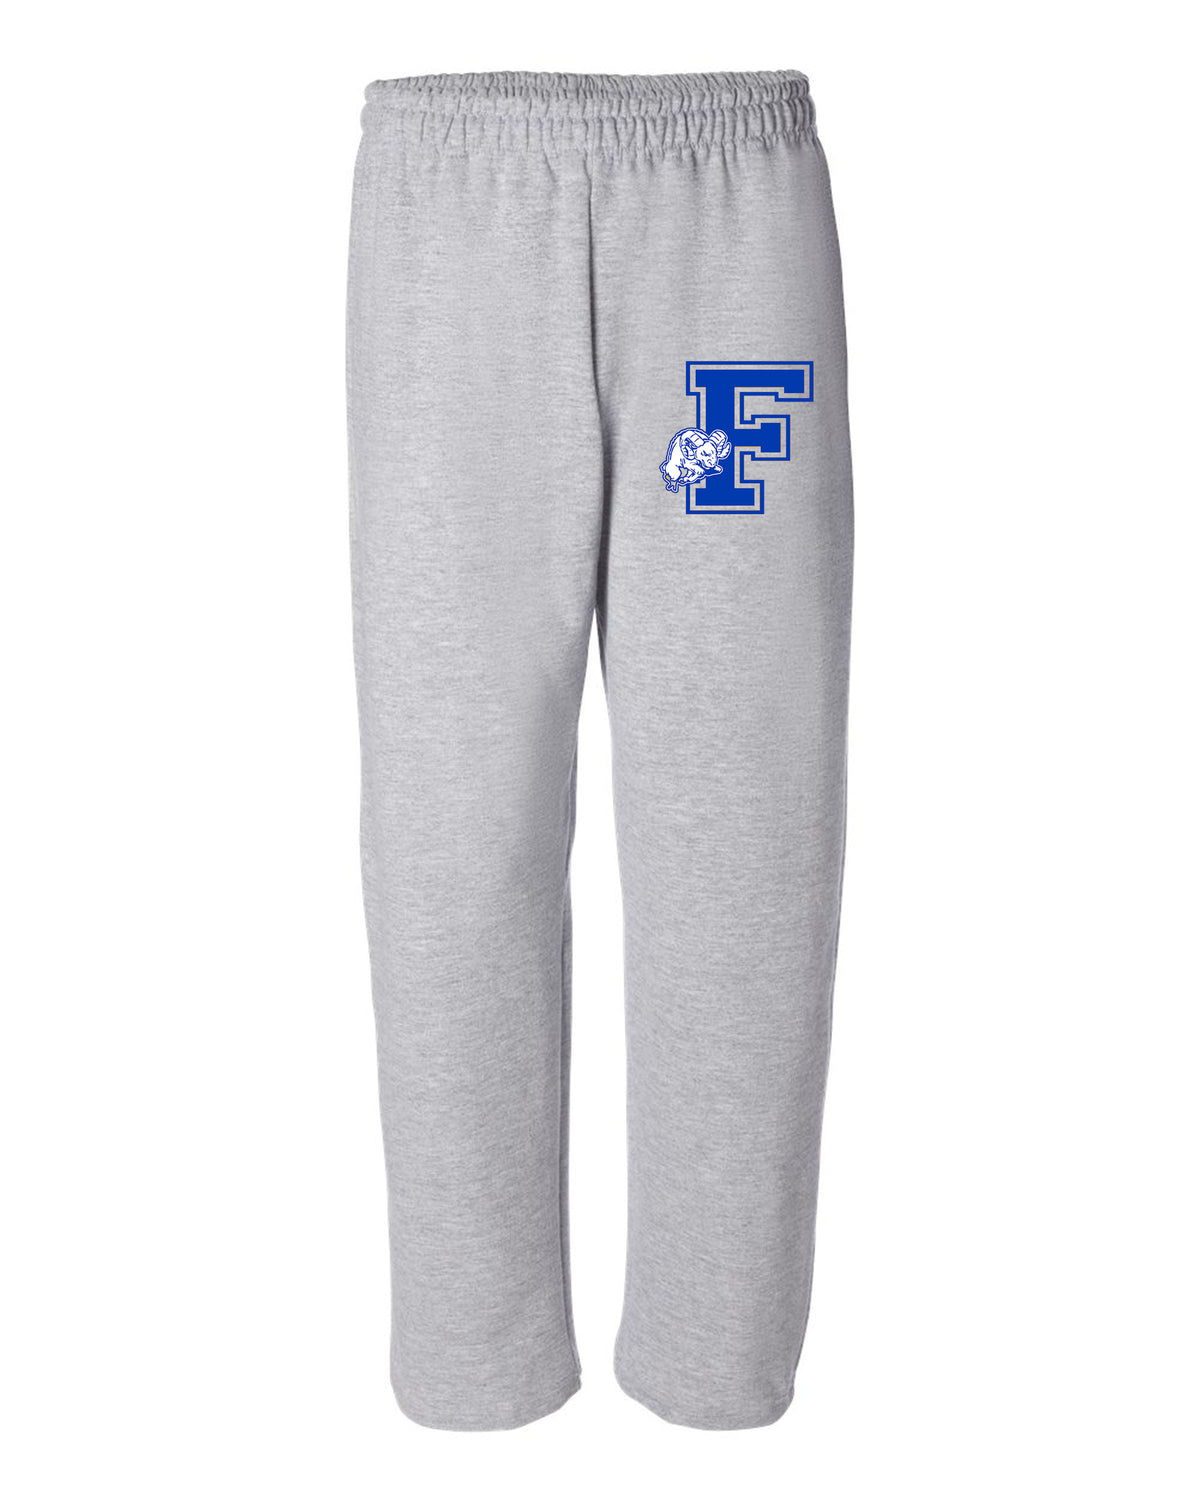 Franklin School Design 1 Open Bottom Sweatpants